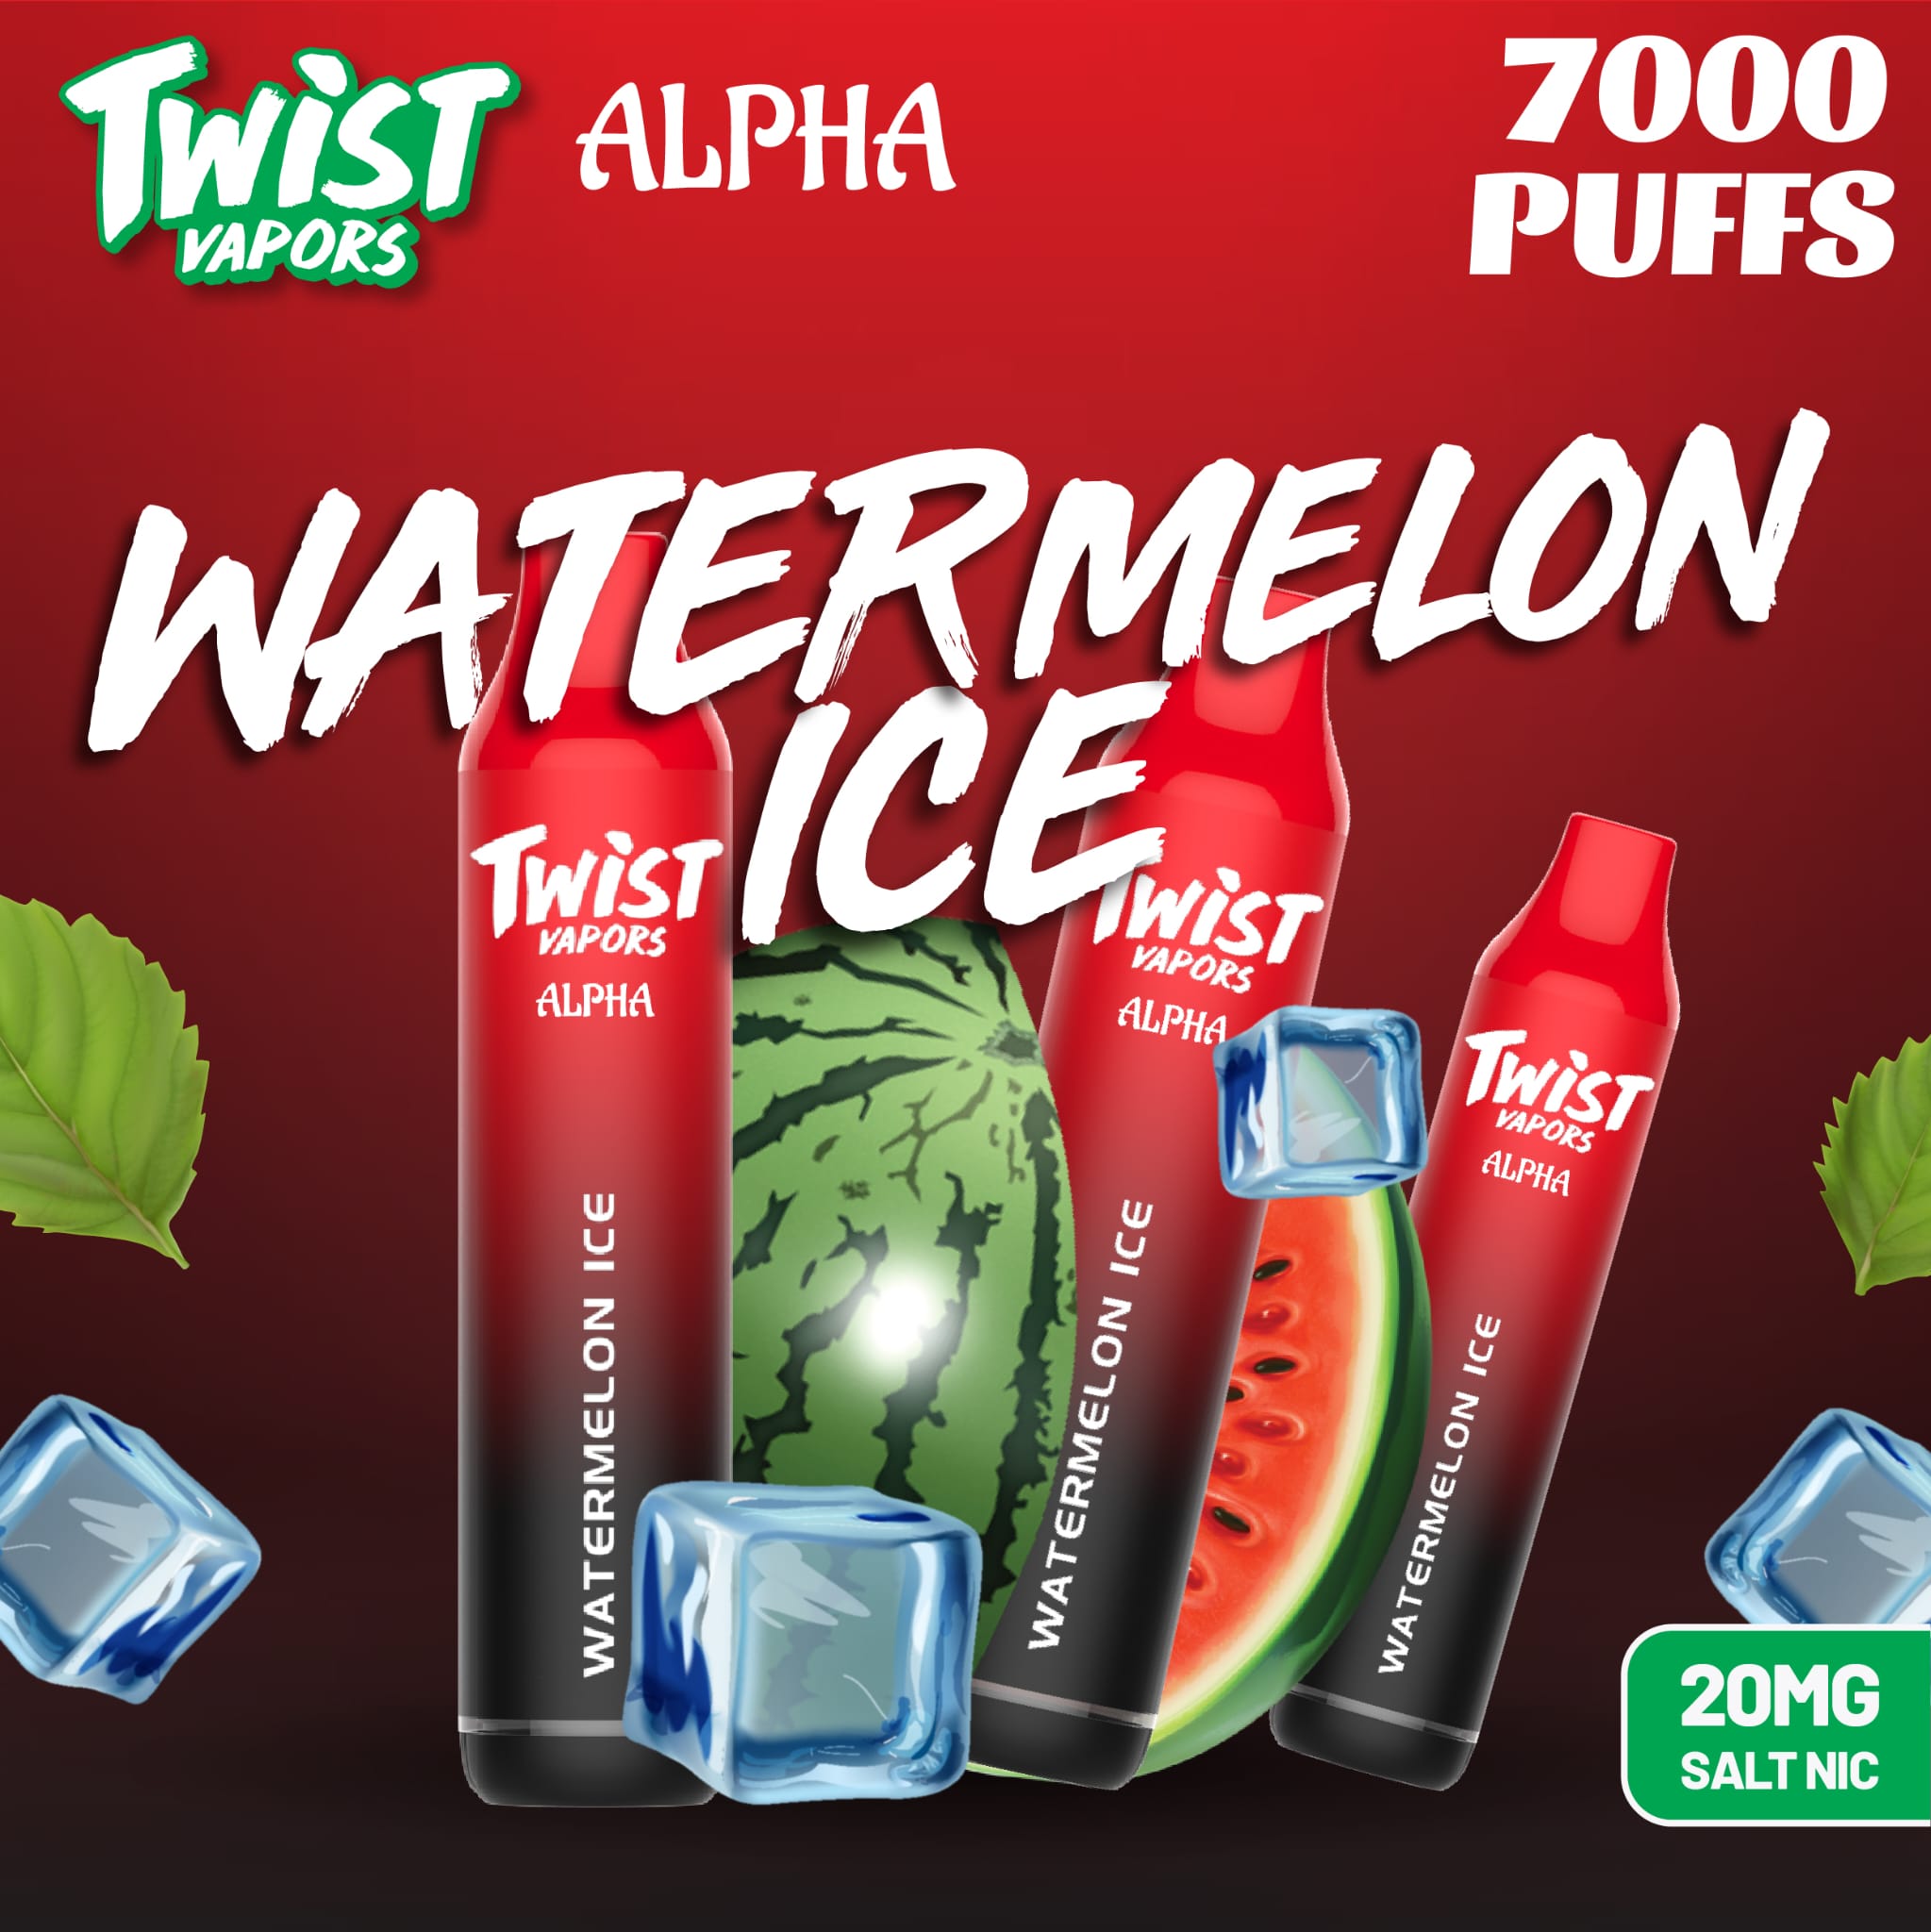 TWIST 7000 puff - Watermelon Ice